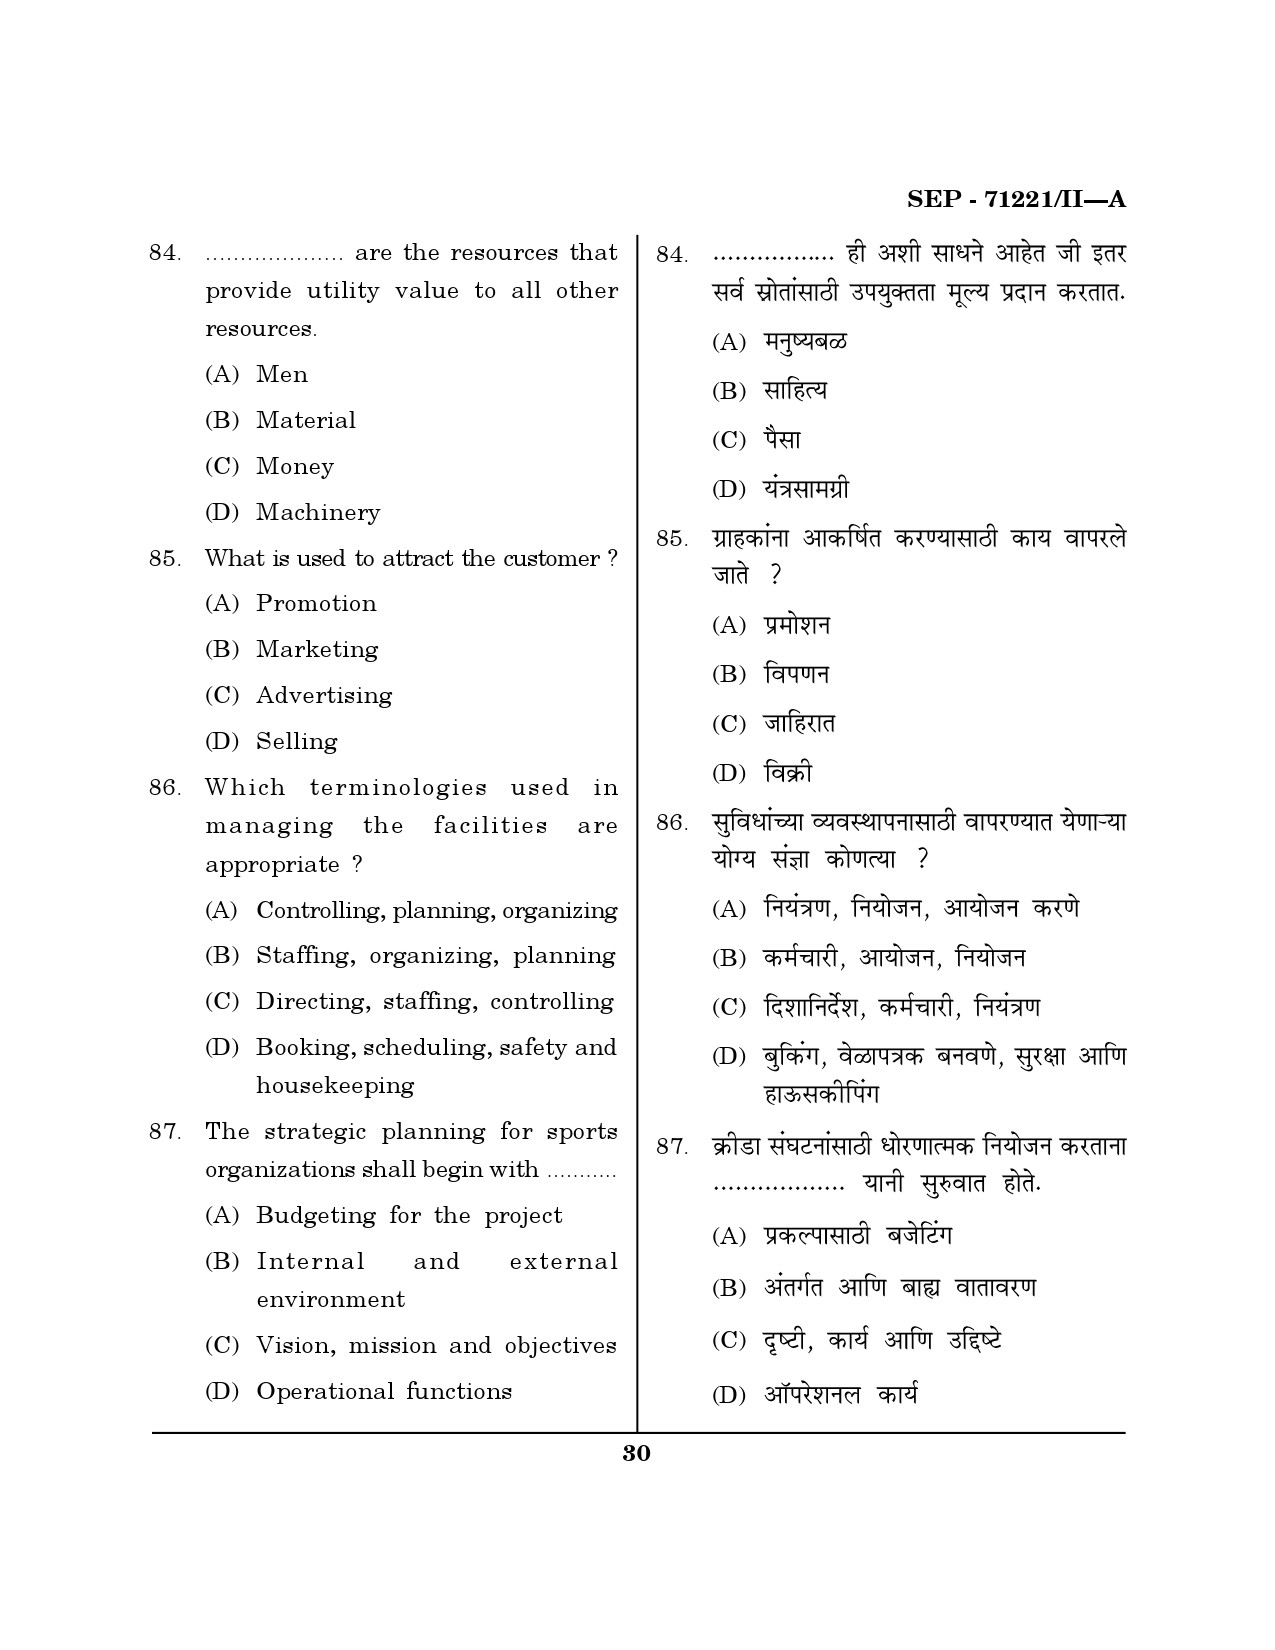 Maharashtra SET Physical Education Exam Question Paper September 2021 29